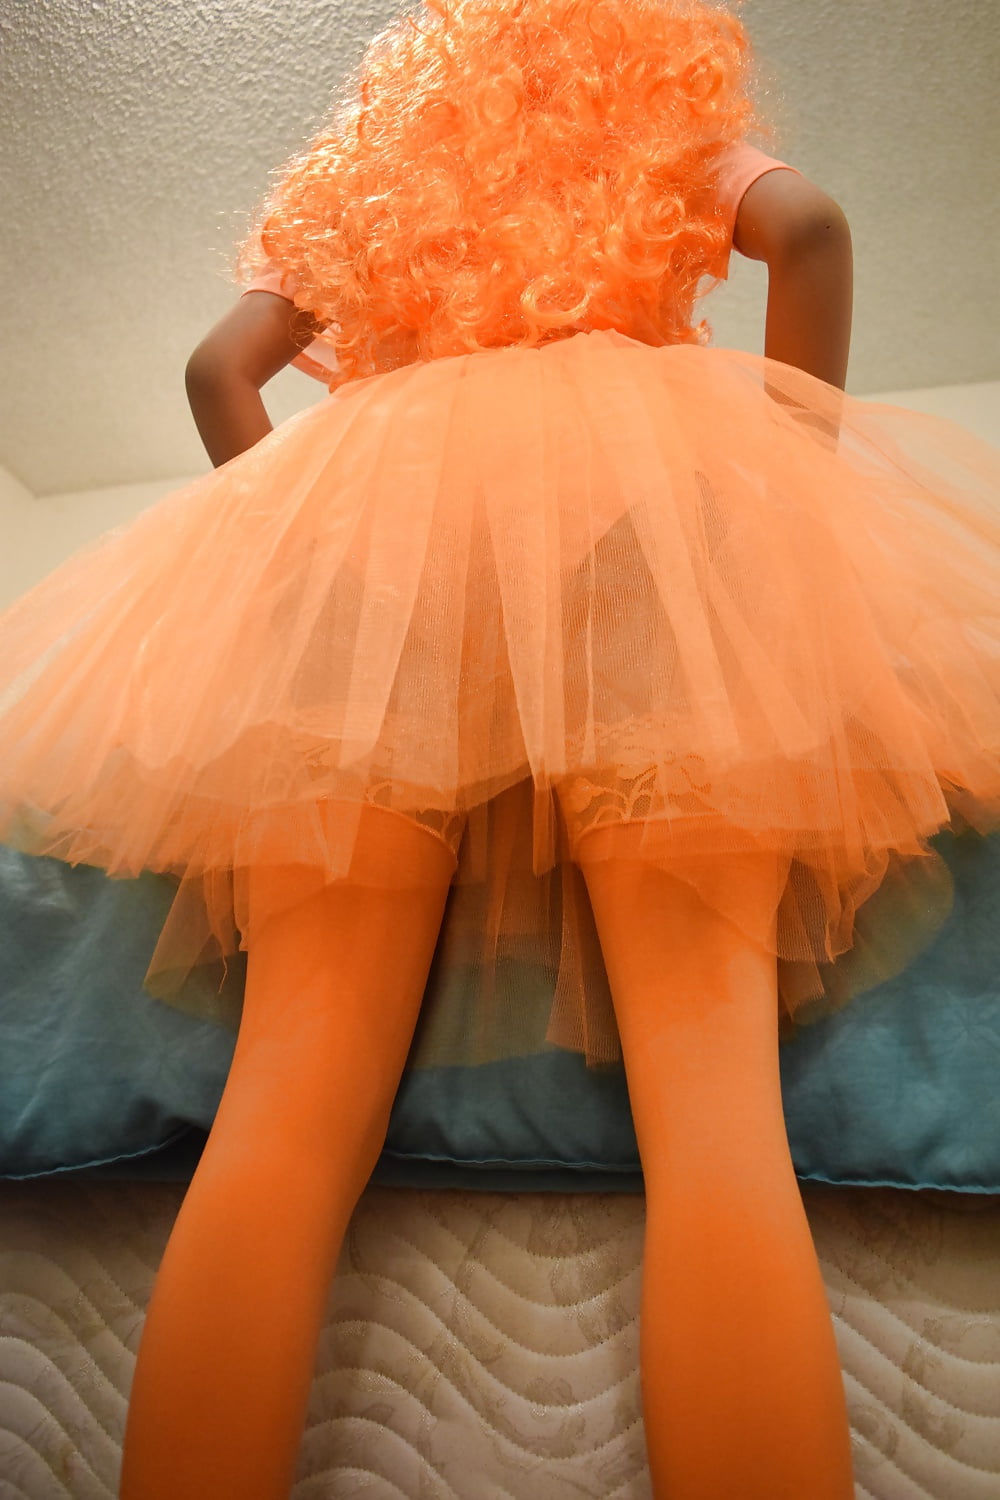 Nina&;s orange dream